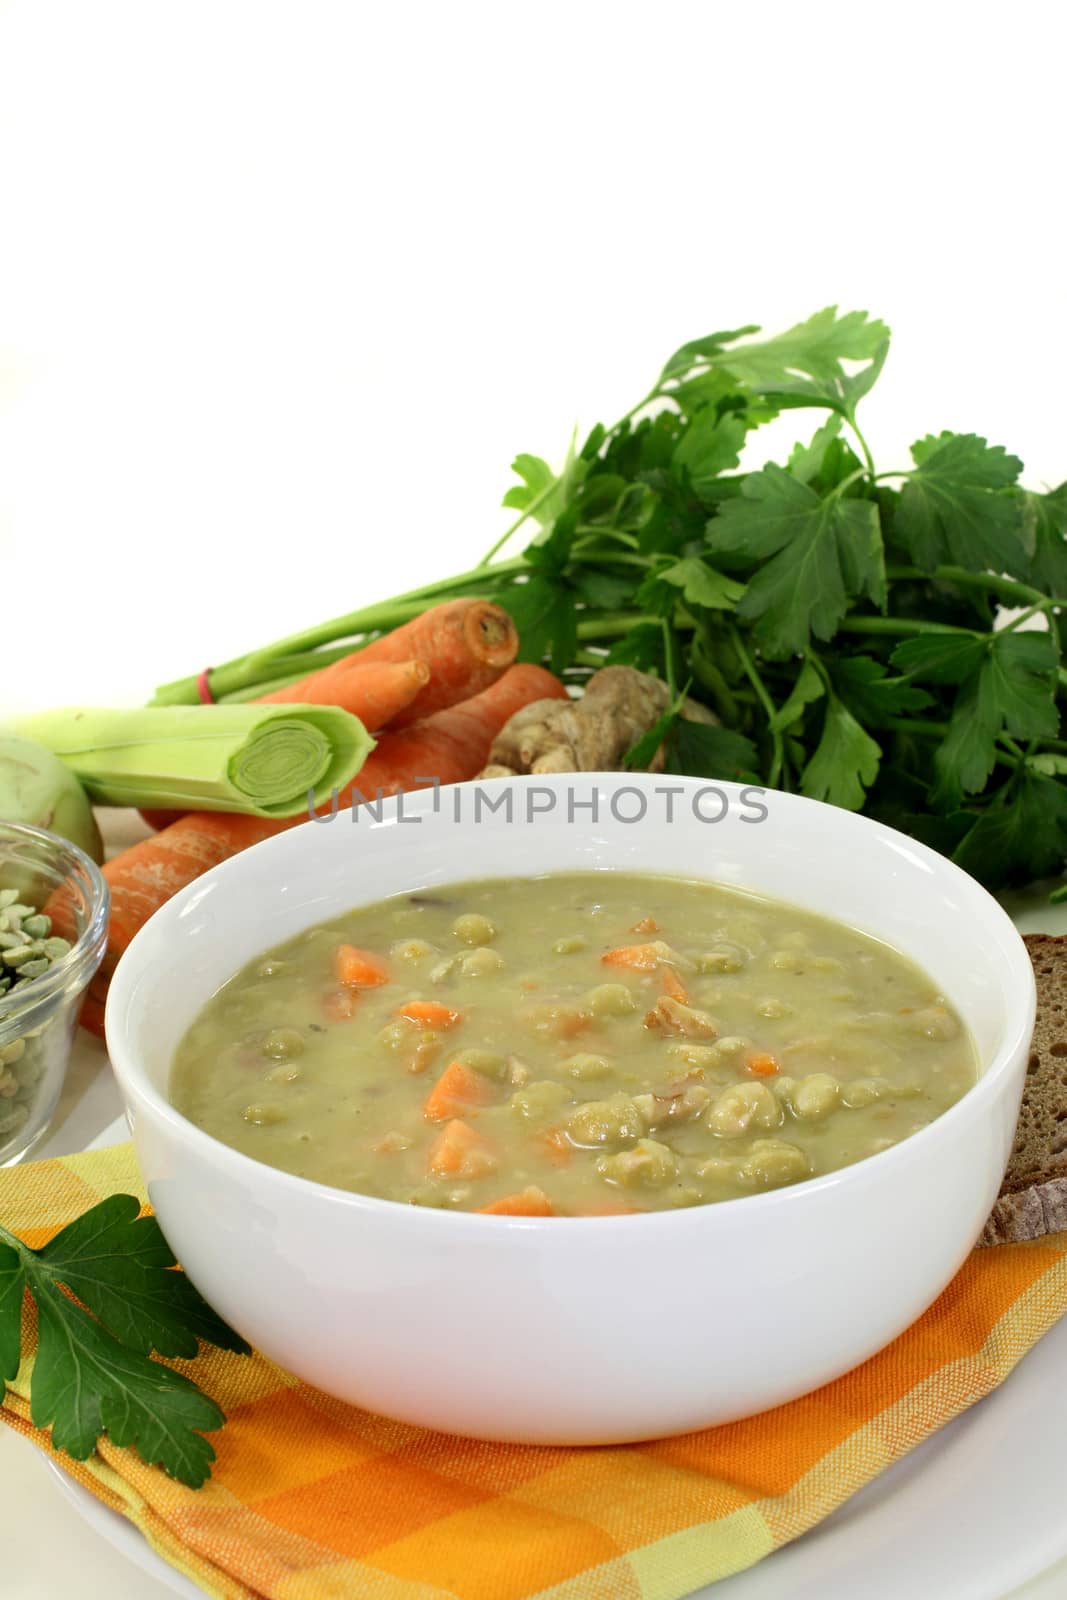 eine wei�e Schale mit Erbseneintopf und Petersilie
a white bowl of pea soup and parsley 